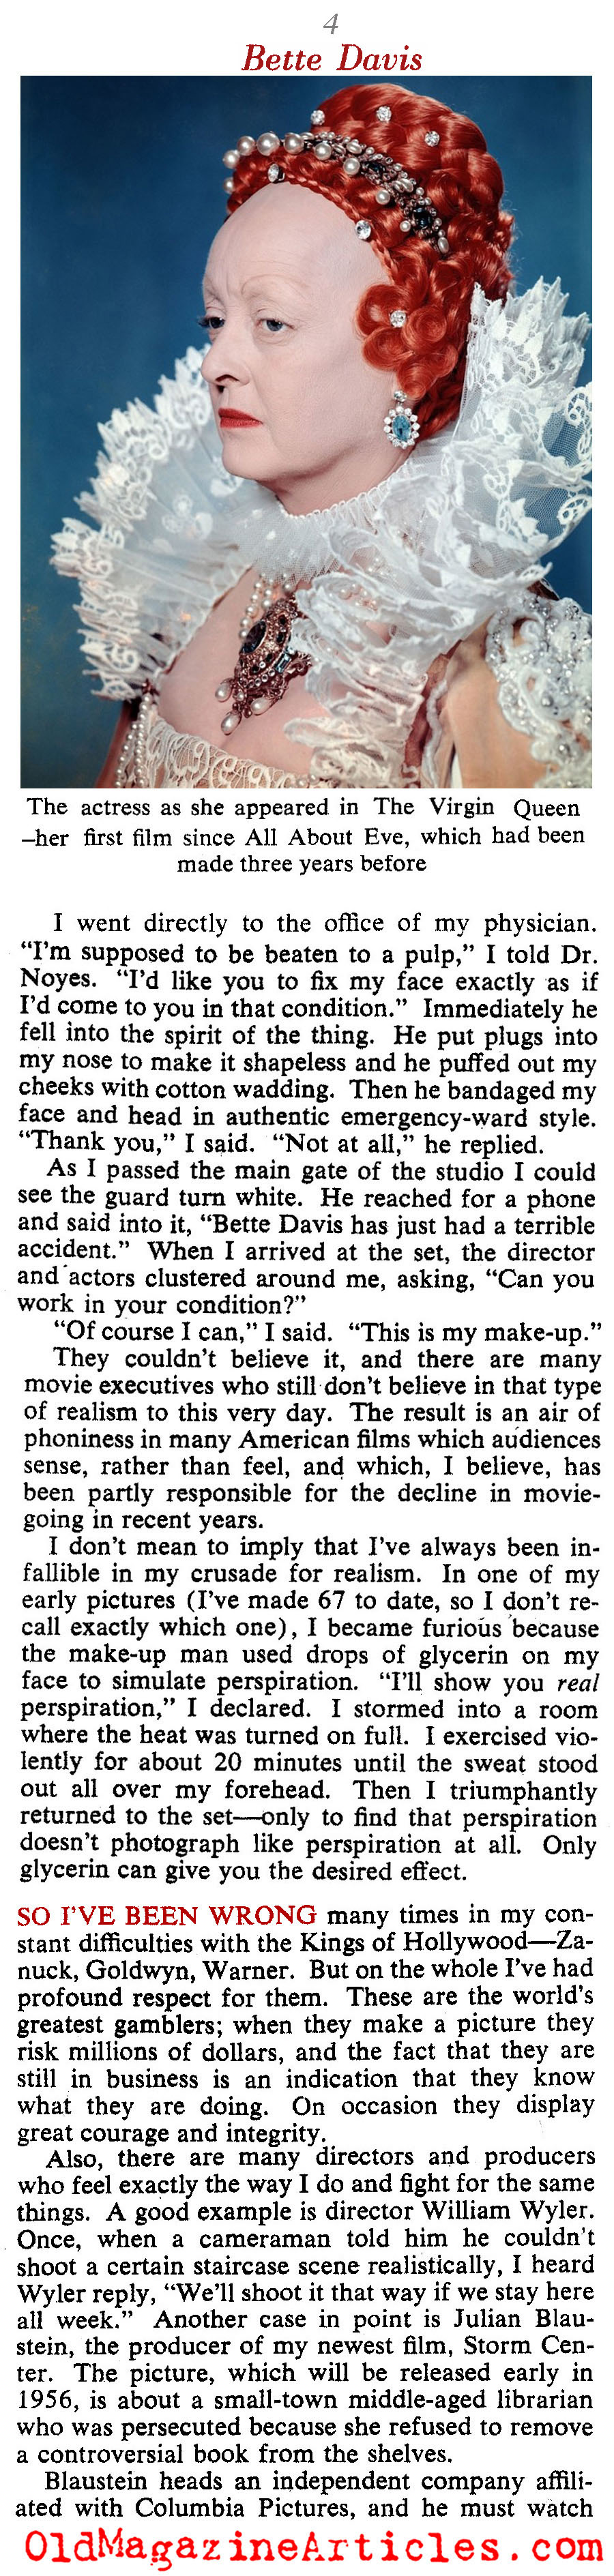 Bette Davis Tells All (Collier's Magazine, 1955)